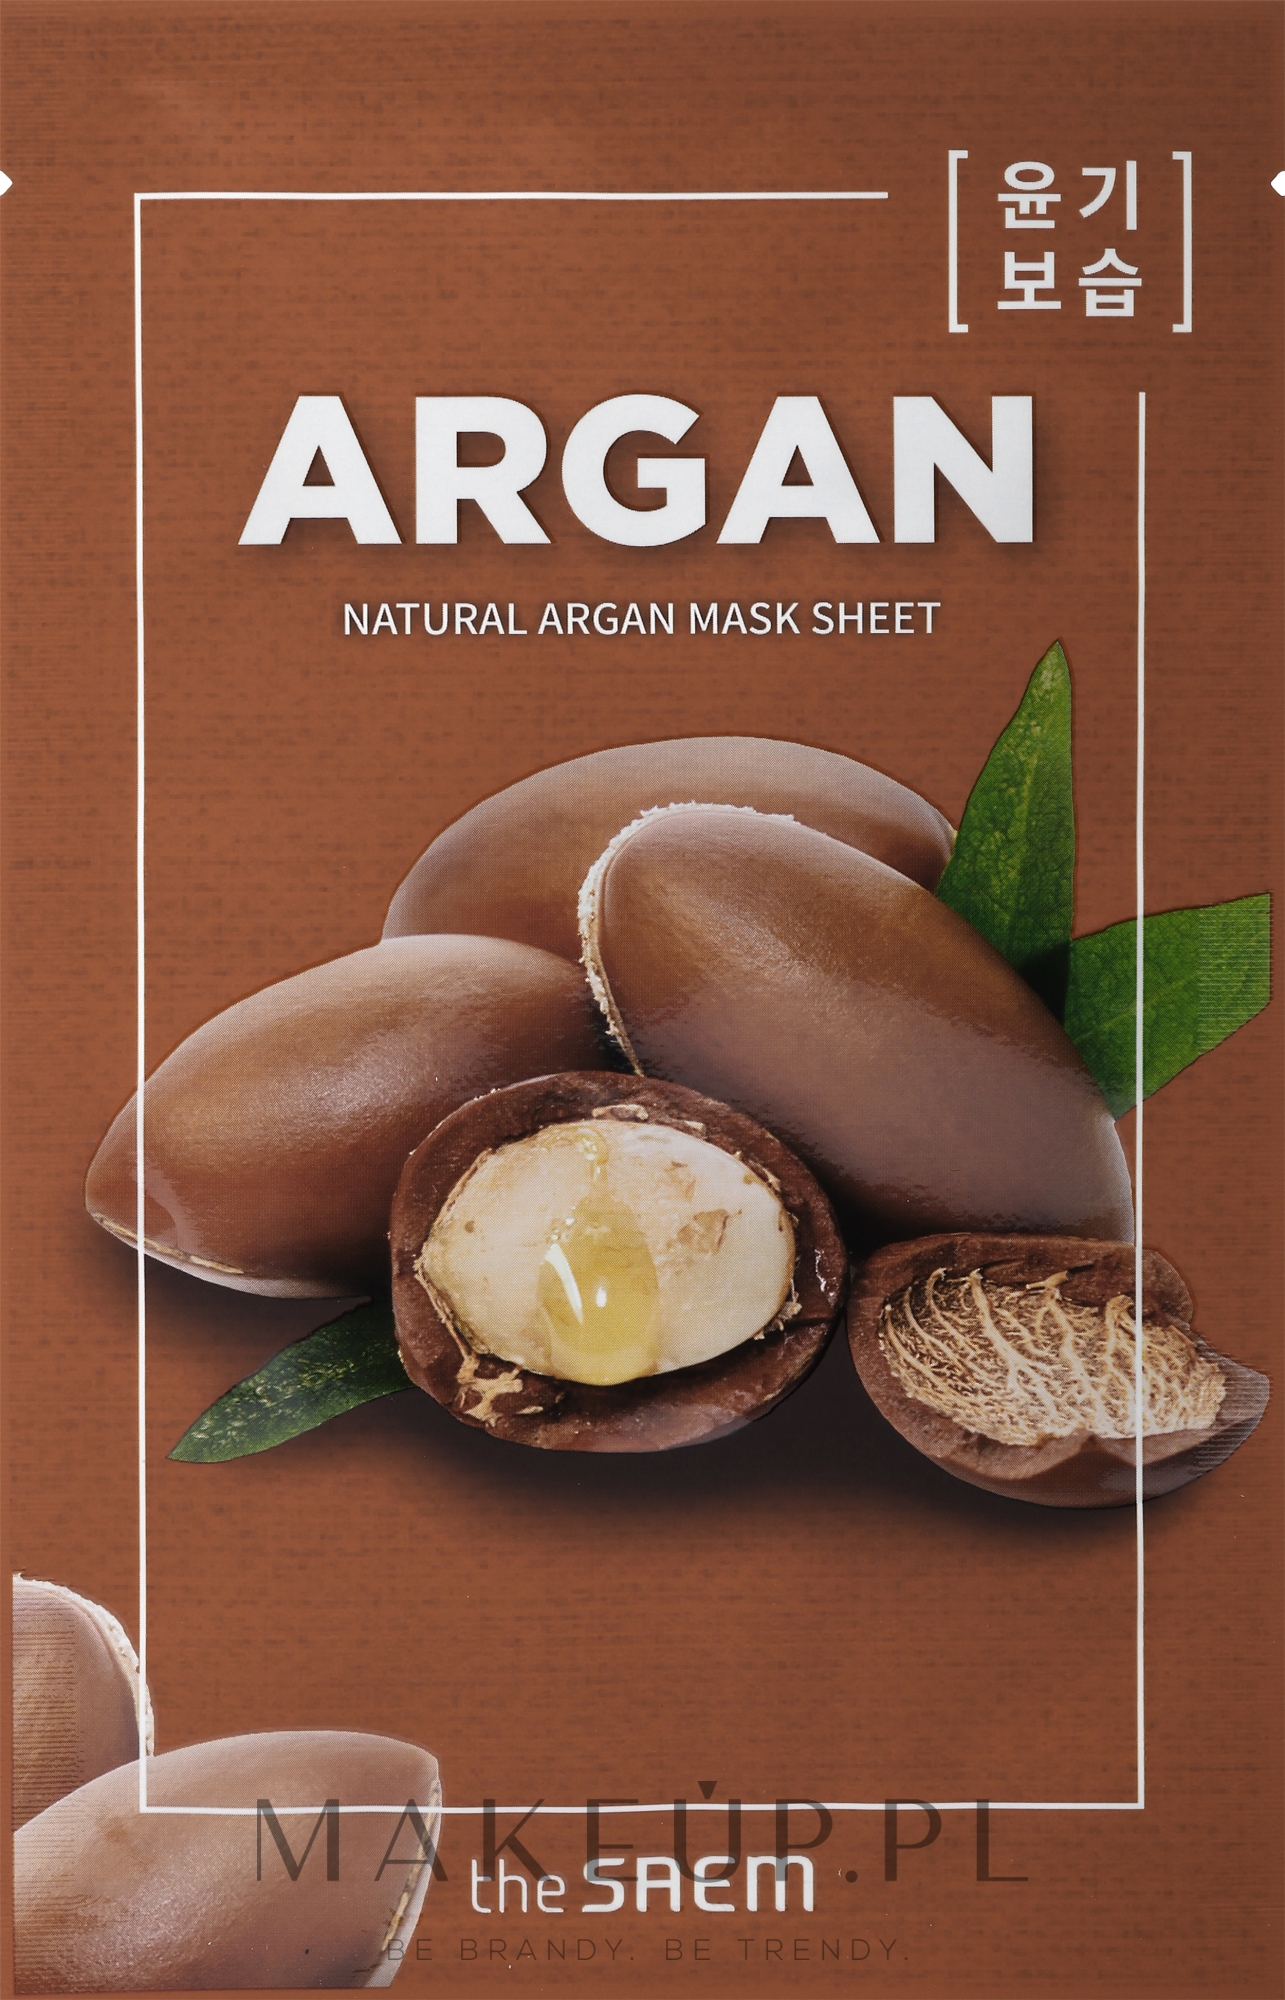 Maska na tkaninie z naturalnymi ekstraktami Olej arganowy - The Saem Natural Argan Mask Sheet  — Zdjęcie 21 ml